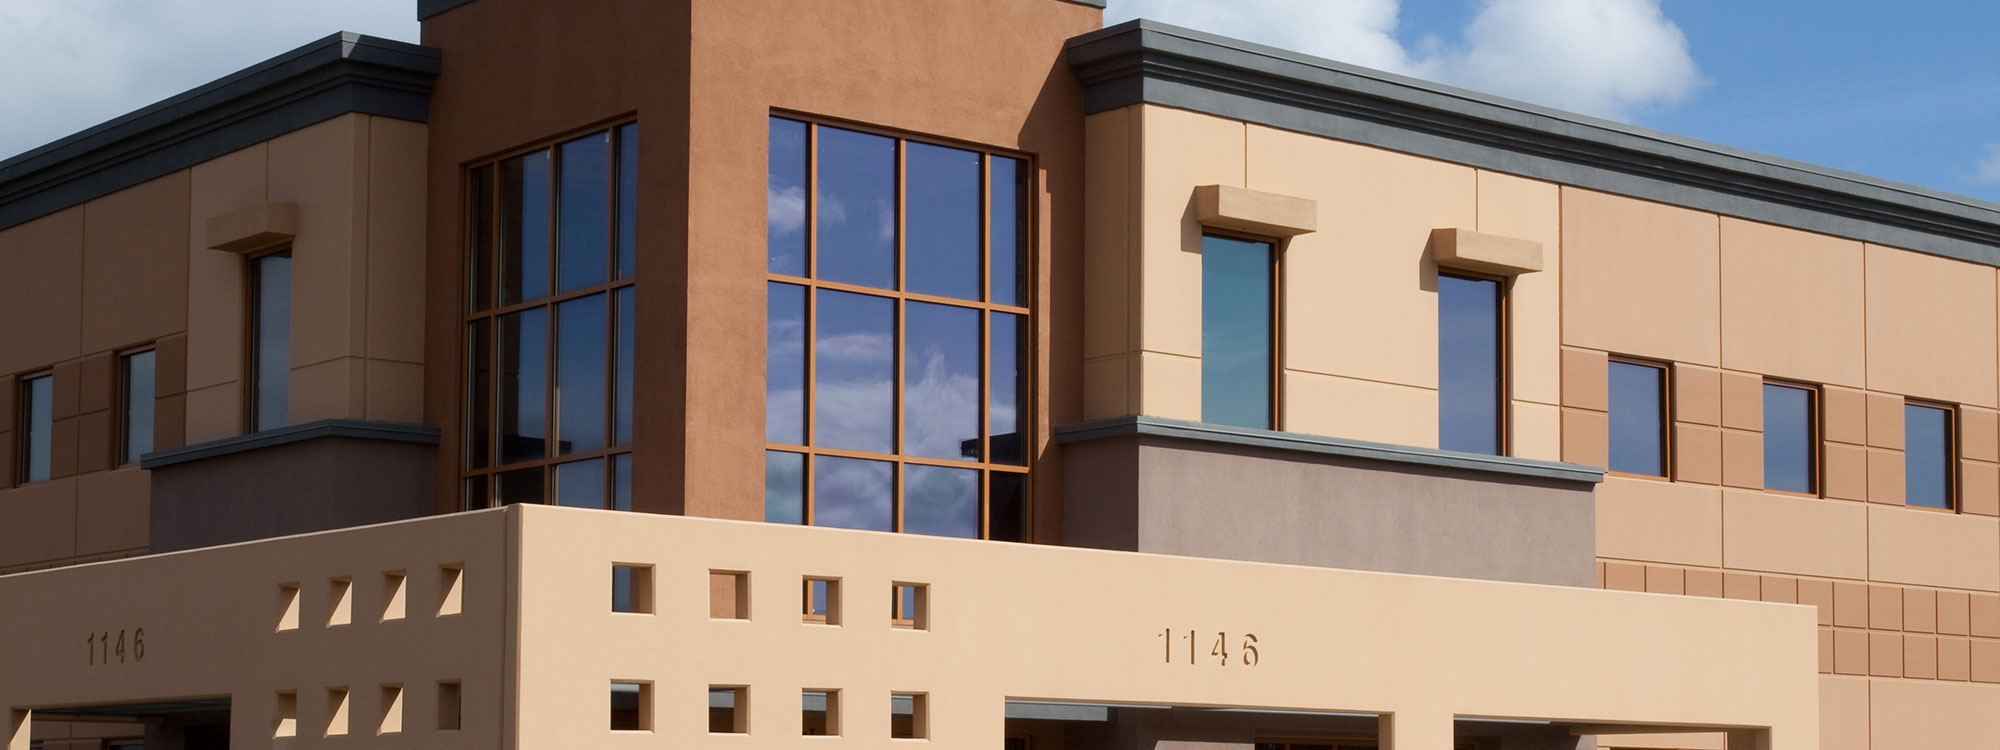 Commercial Offices San Luis Obispo Contractor - Professional Office building builder - JW Design & Construction